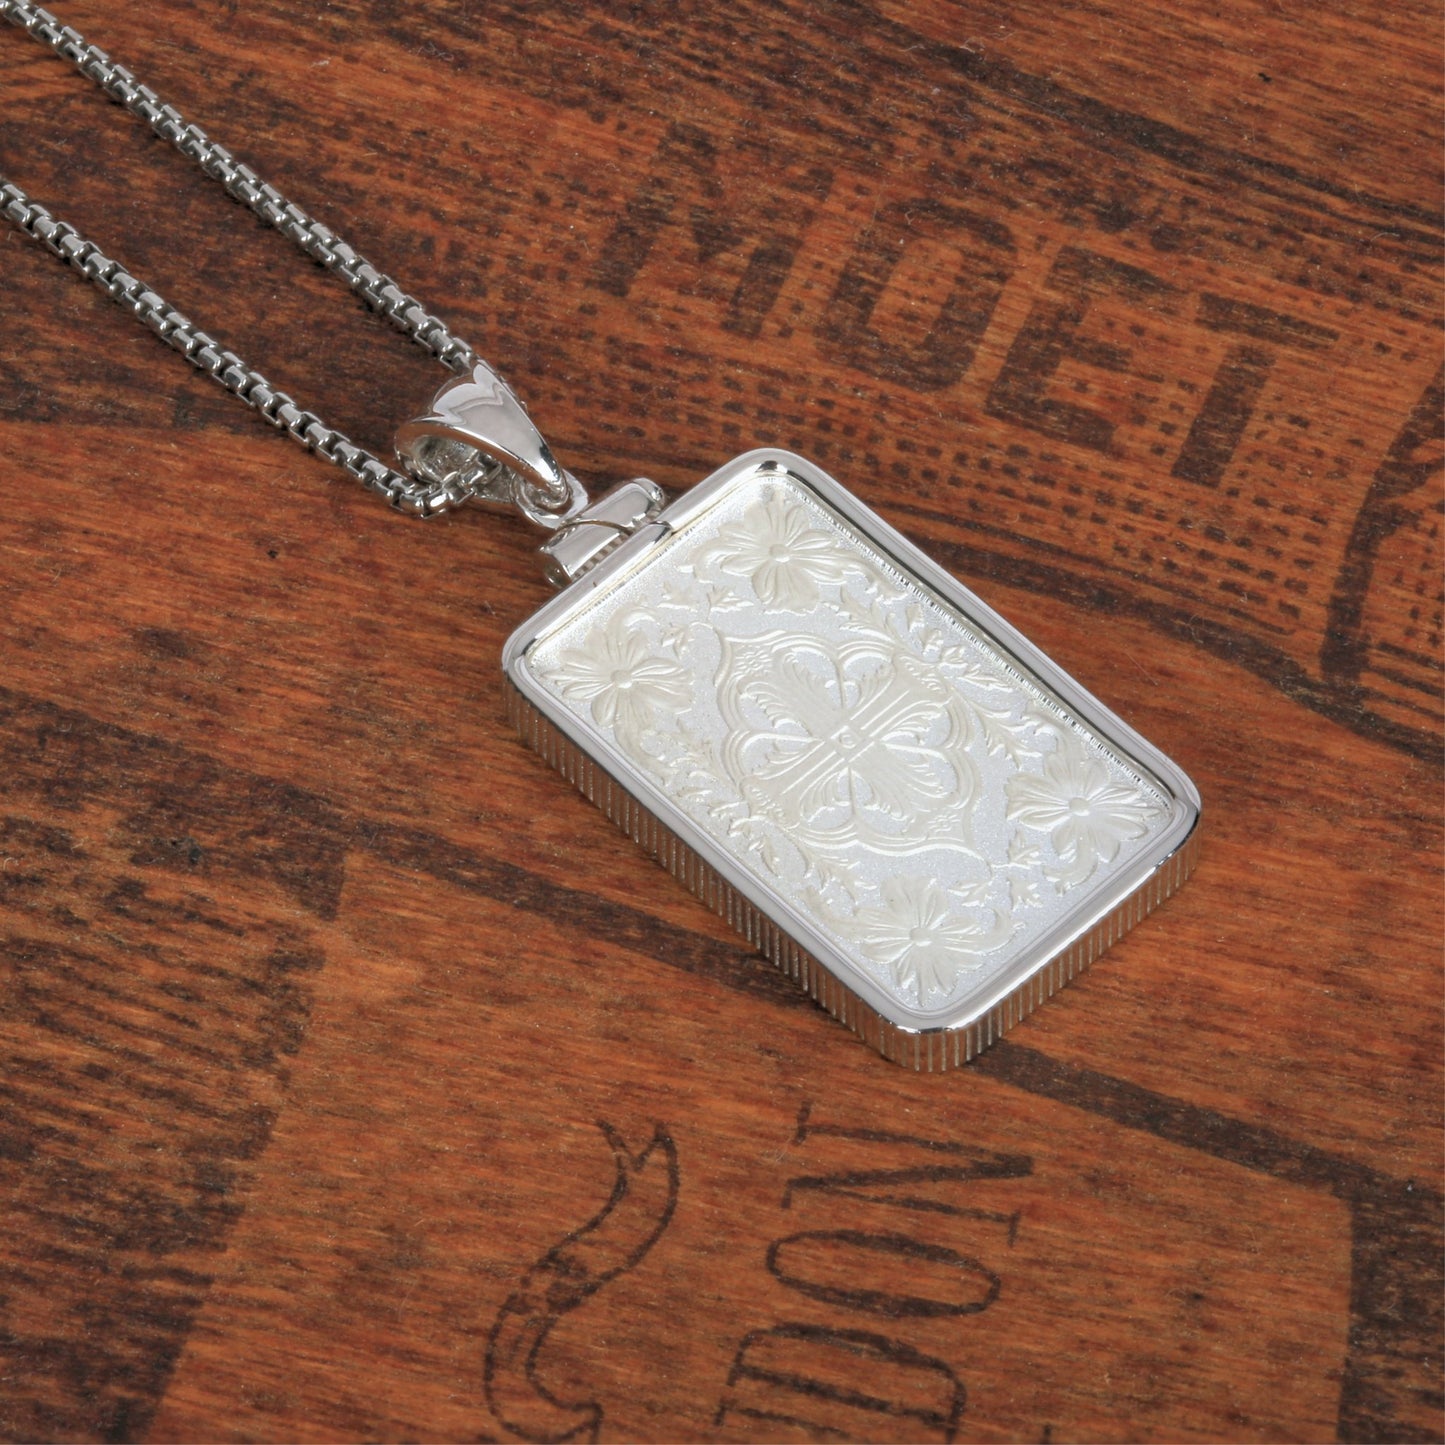 WPE Amulet Pendant - Rhodium Over Sterling Silver Bezel + "SWISS" 5 Gram .999 Silver Art Bar - WPE